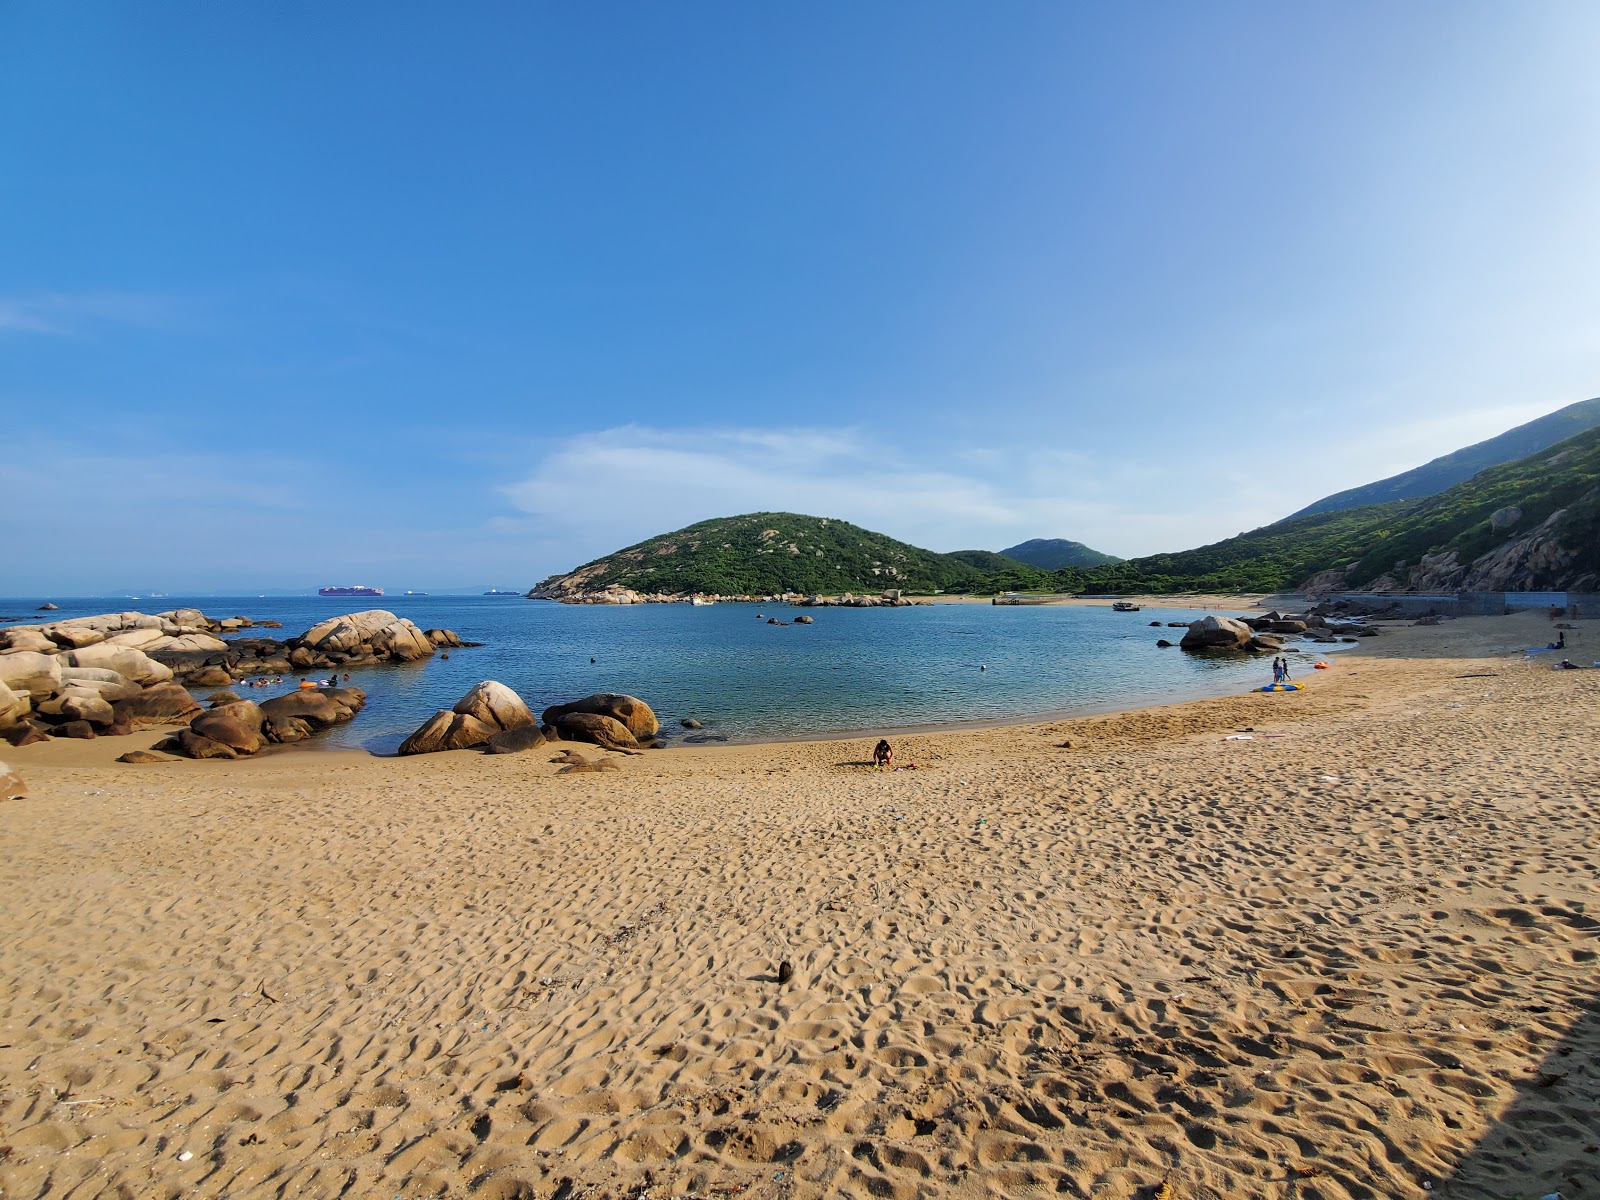 Foto di Yung Shue Ha Beach ubicato in zona naturale